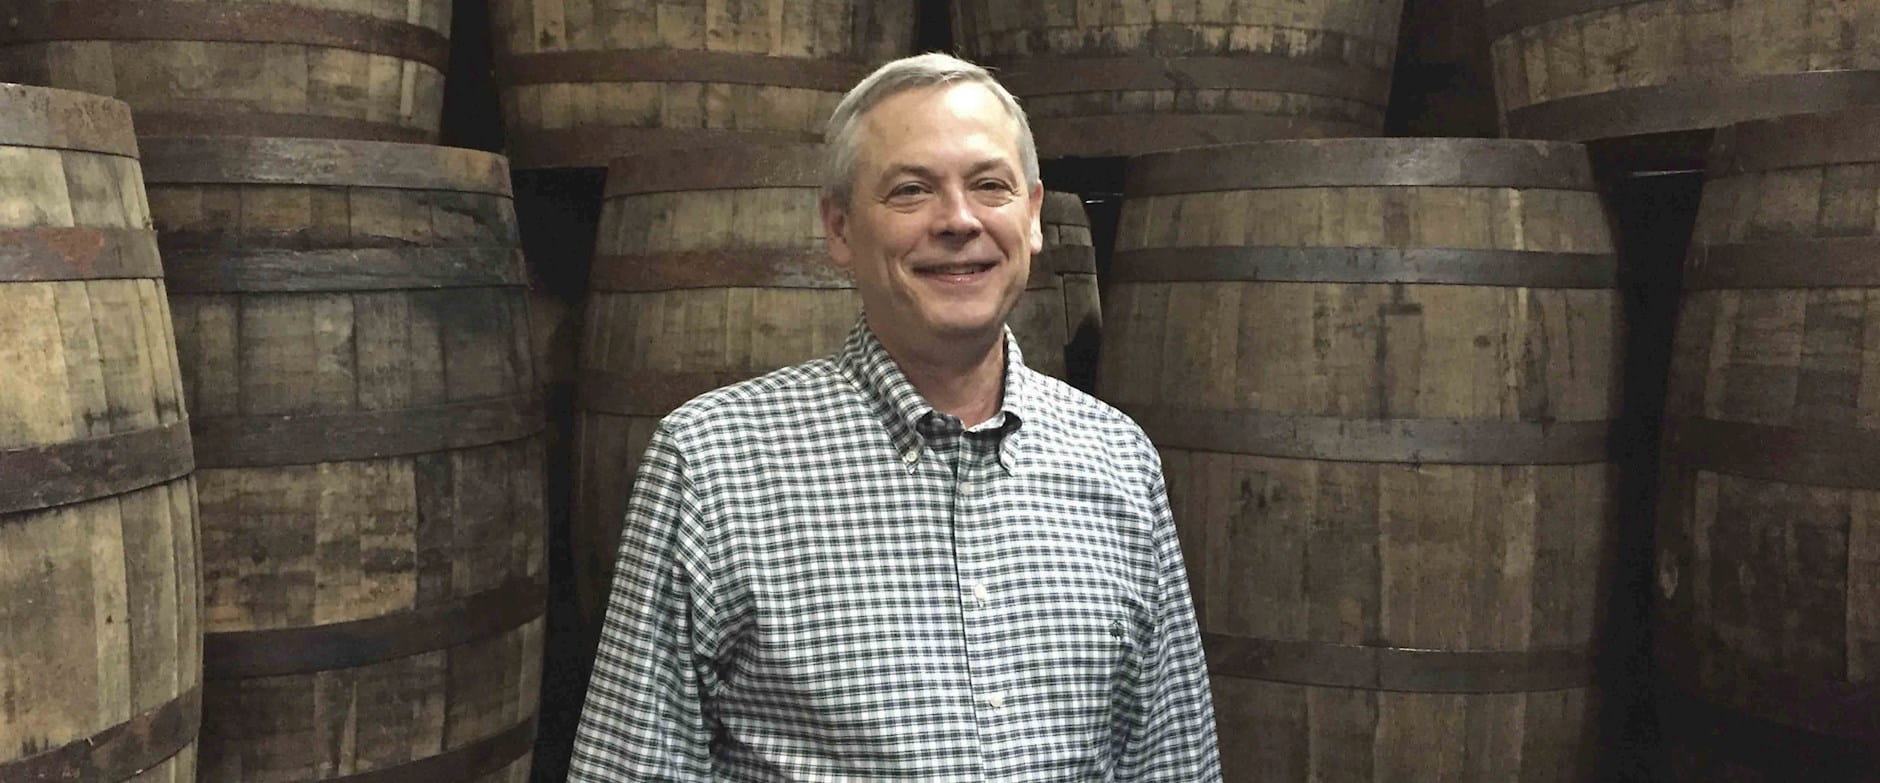 Tom Jensen standing in front of whiskey barrels 